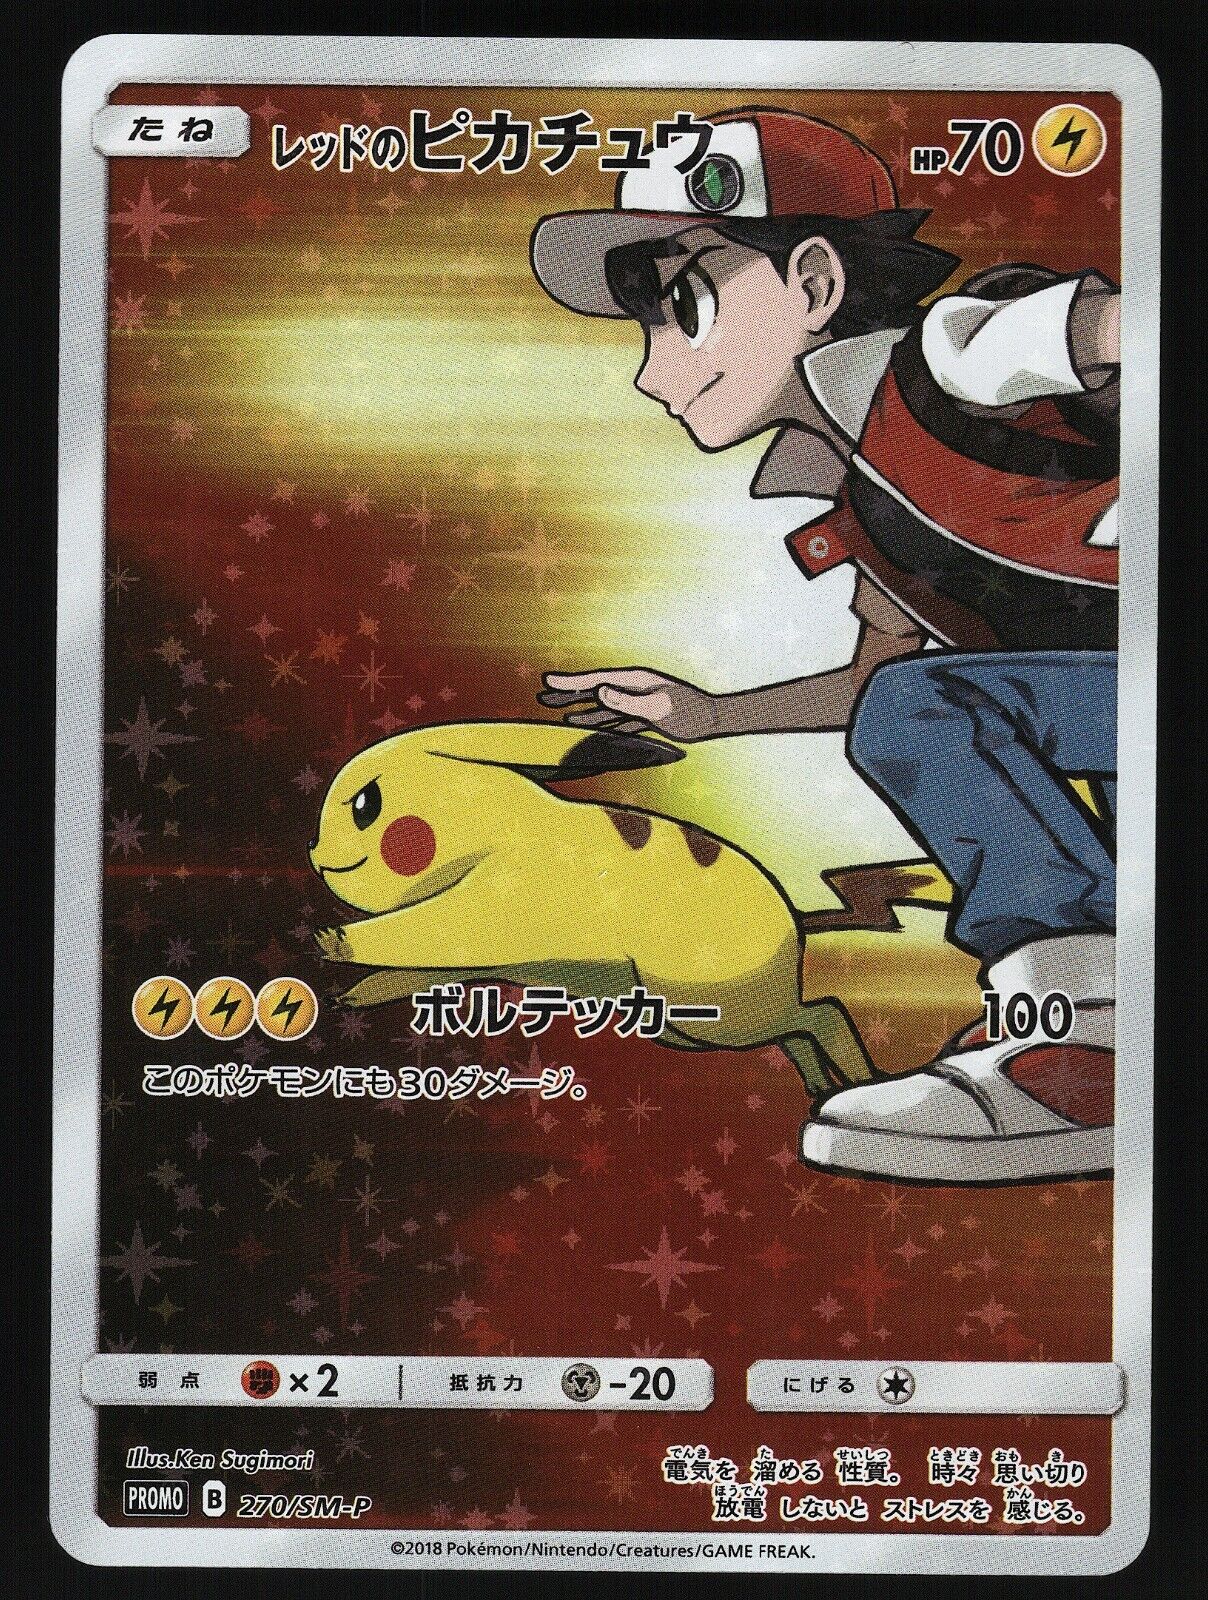 Red\'s Pikachu 270/SM-P 20th Anniversary PROMO Japanese Pokemon Card NEAR MINT